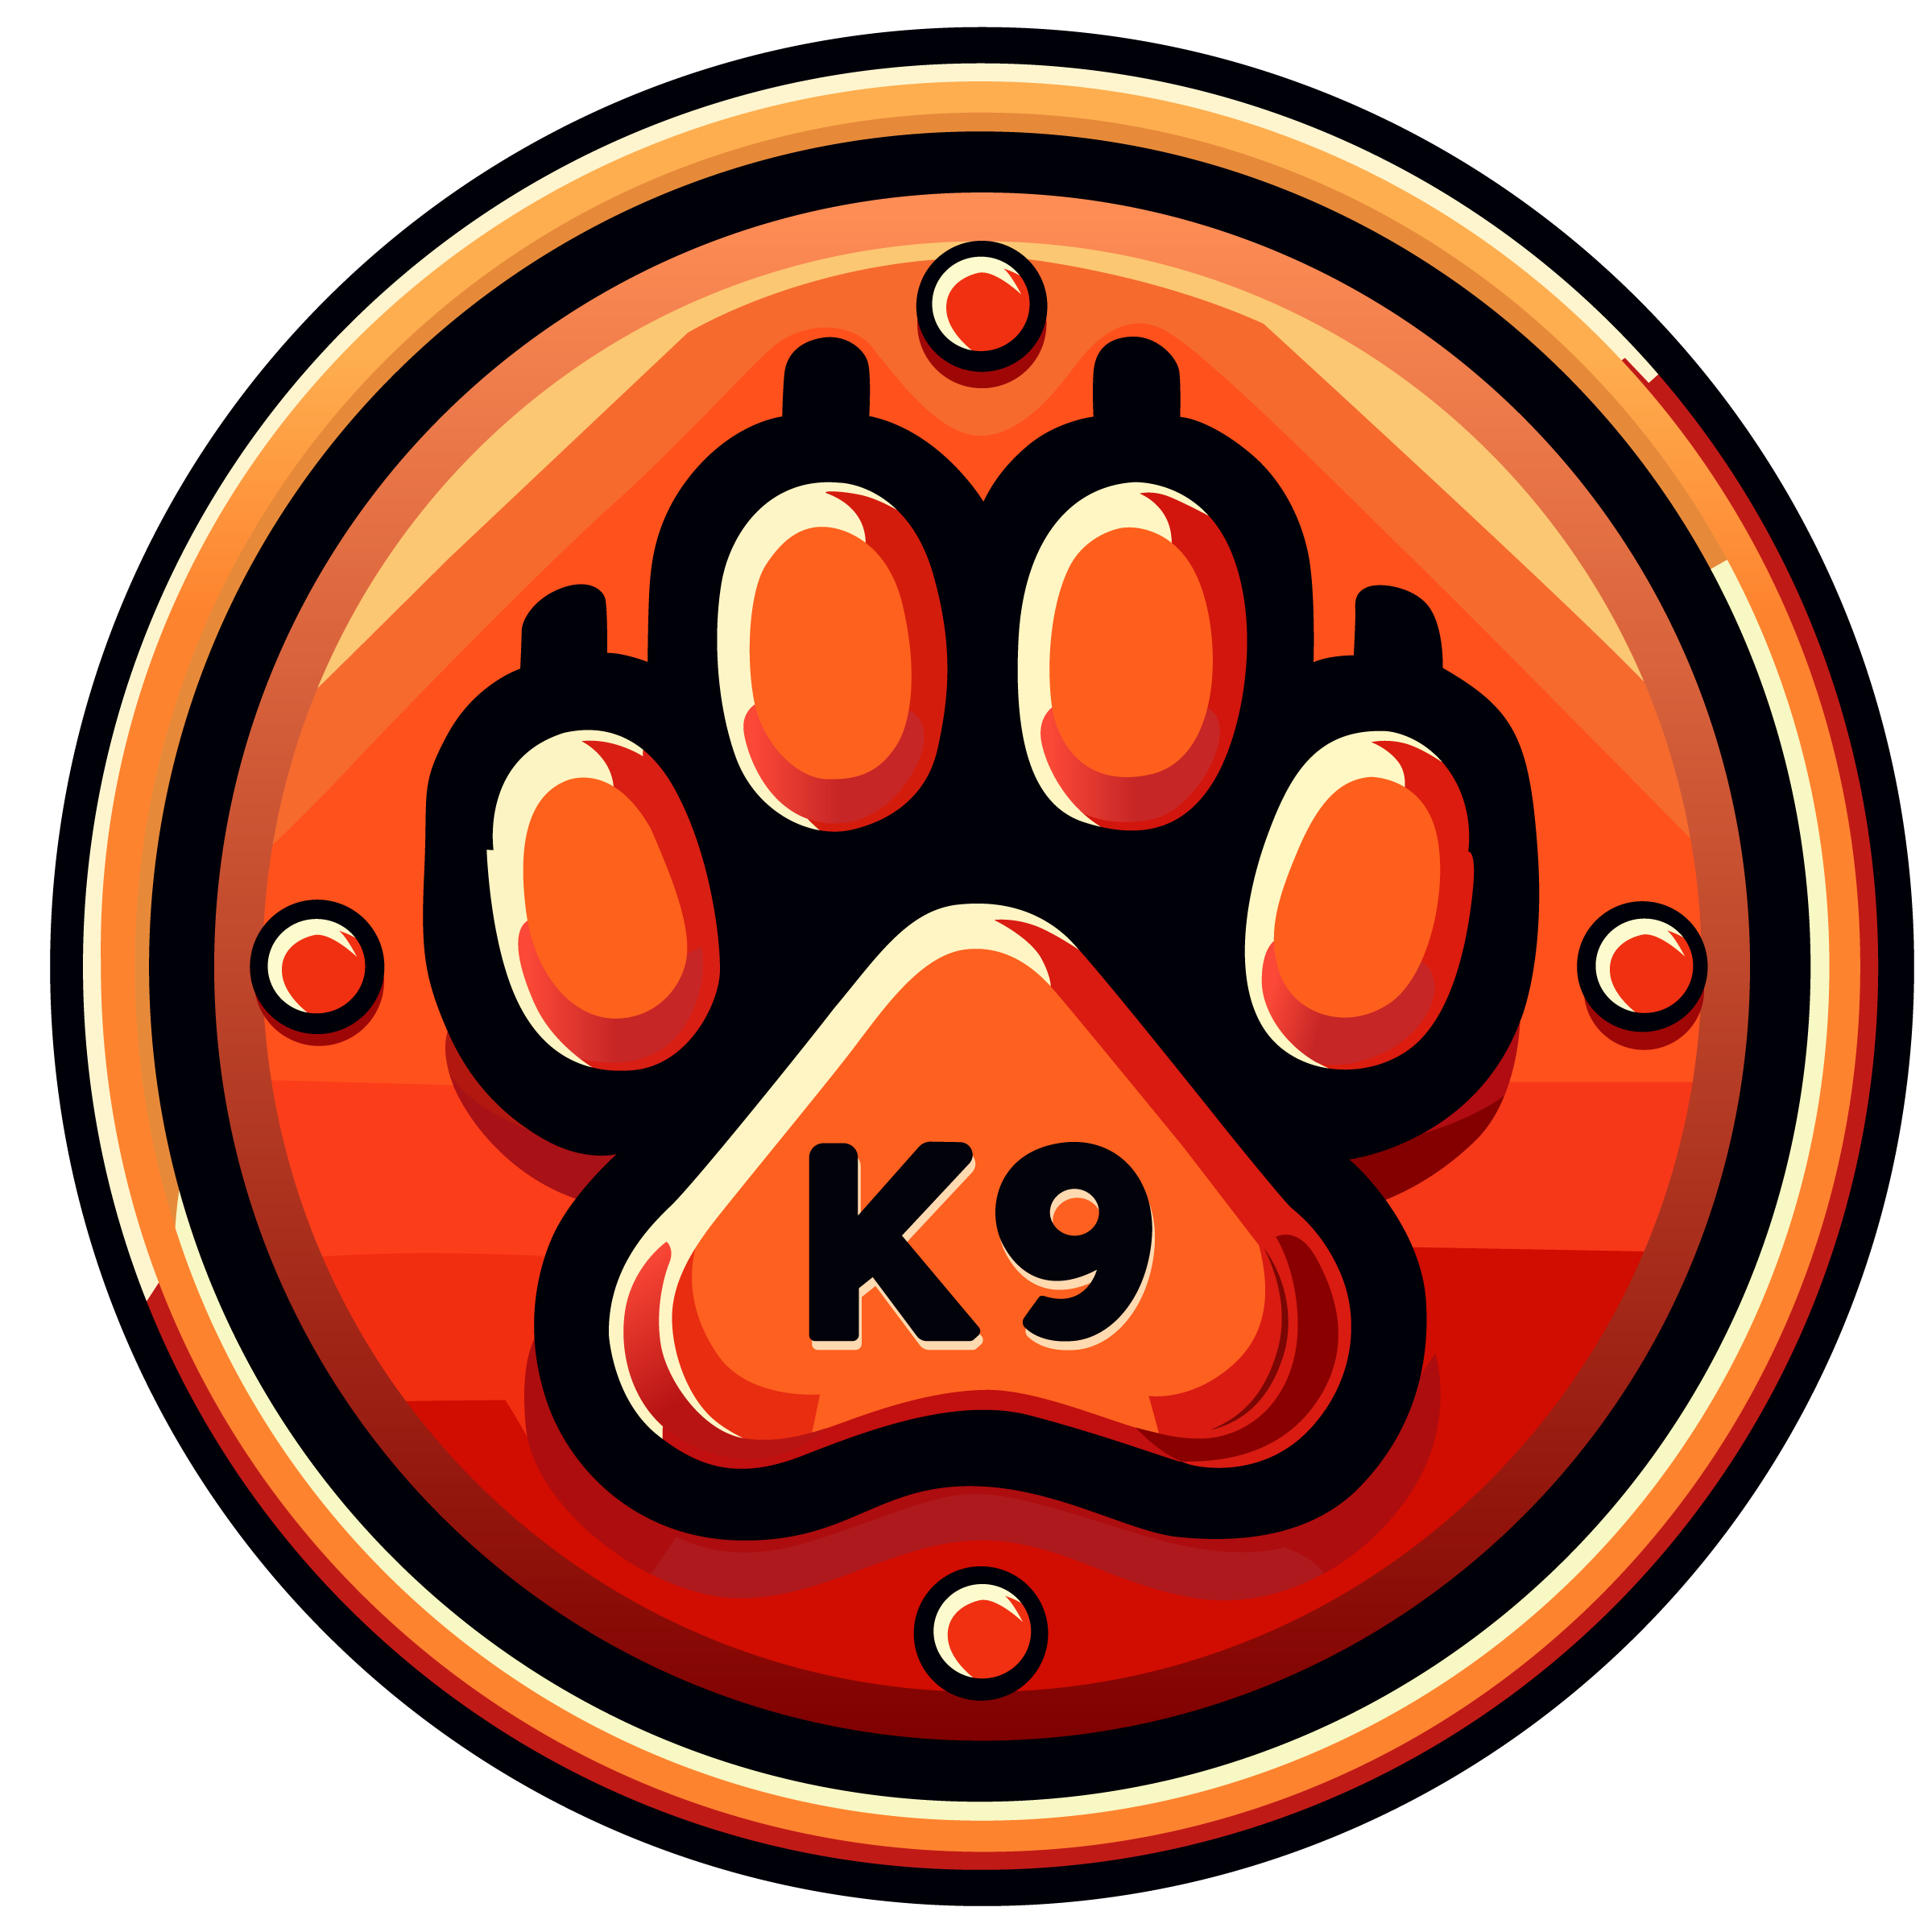 logo k9